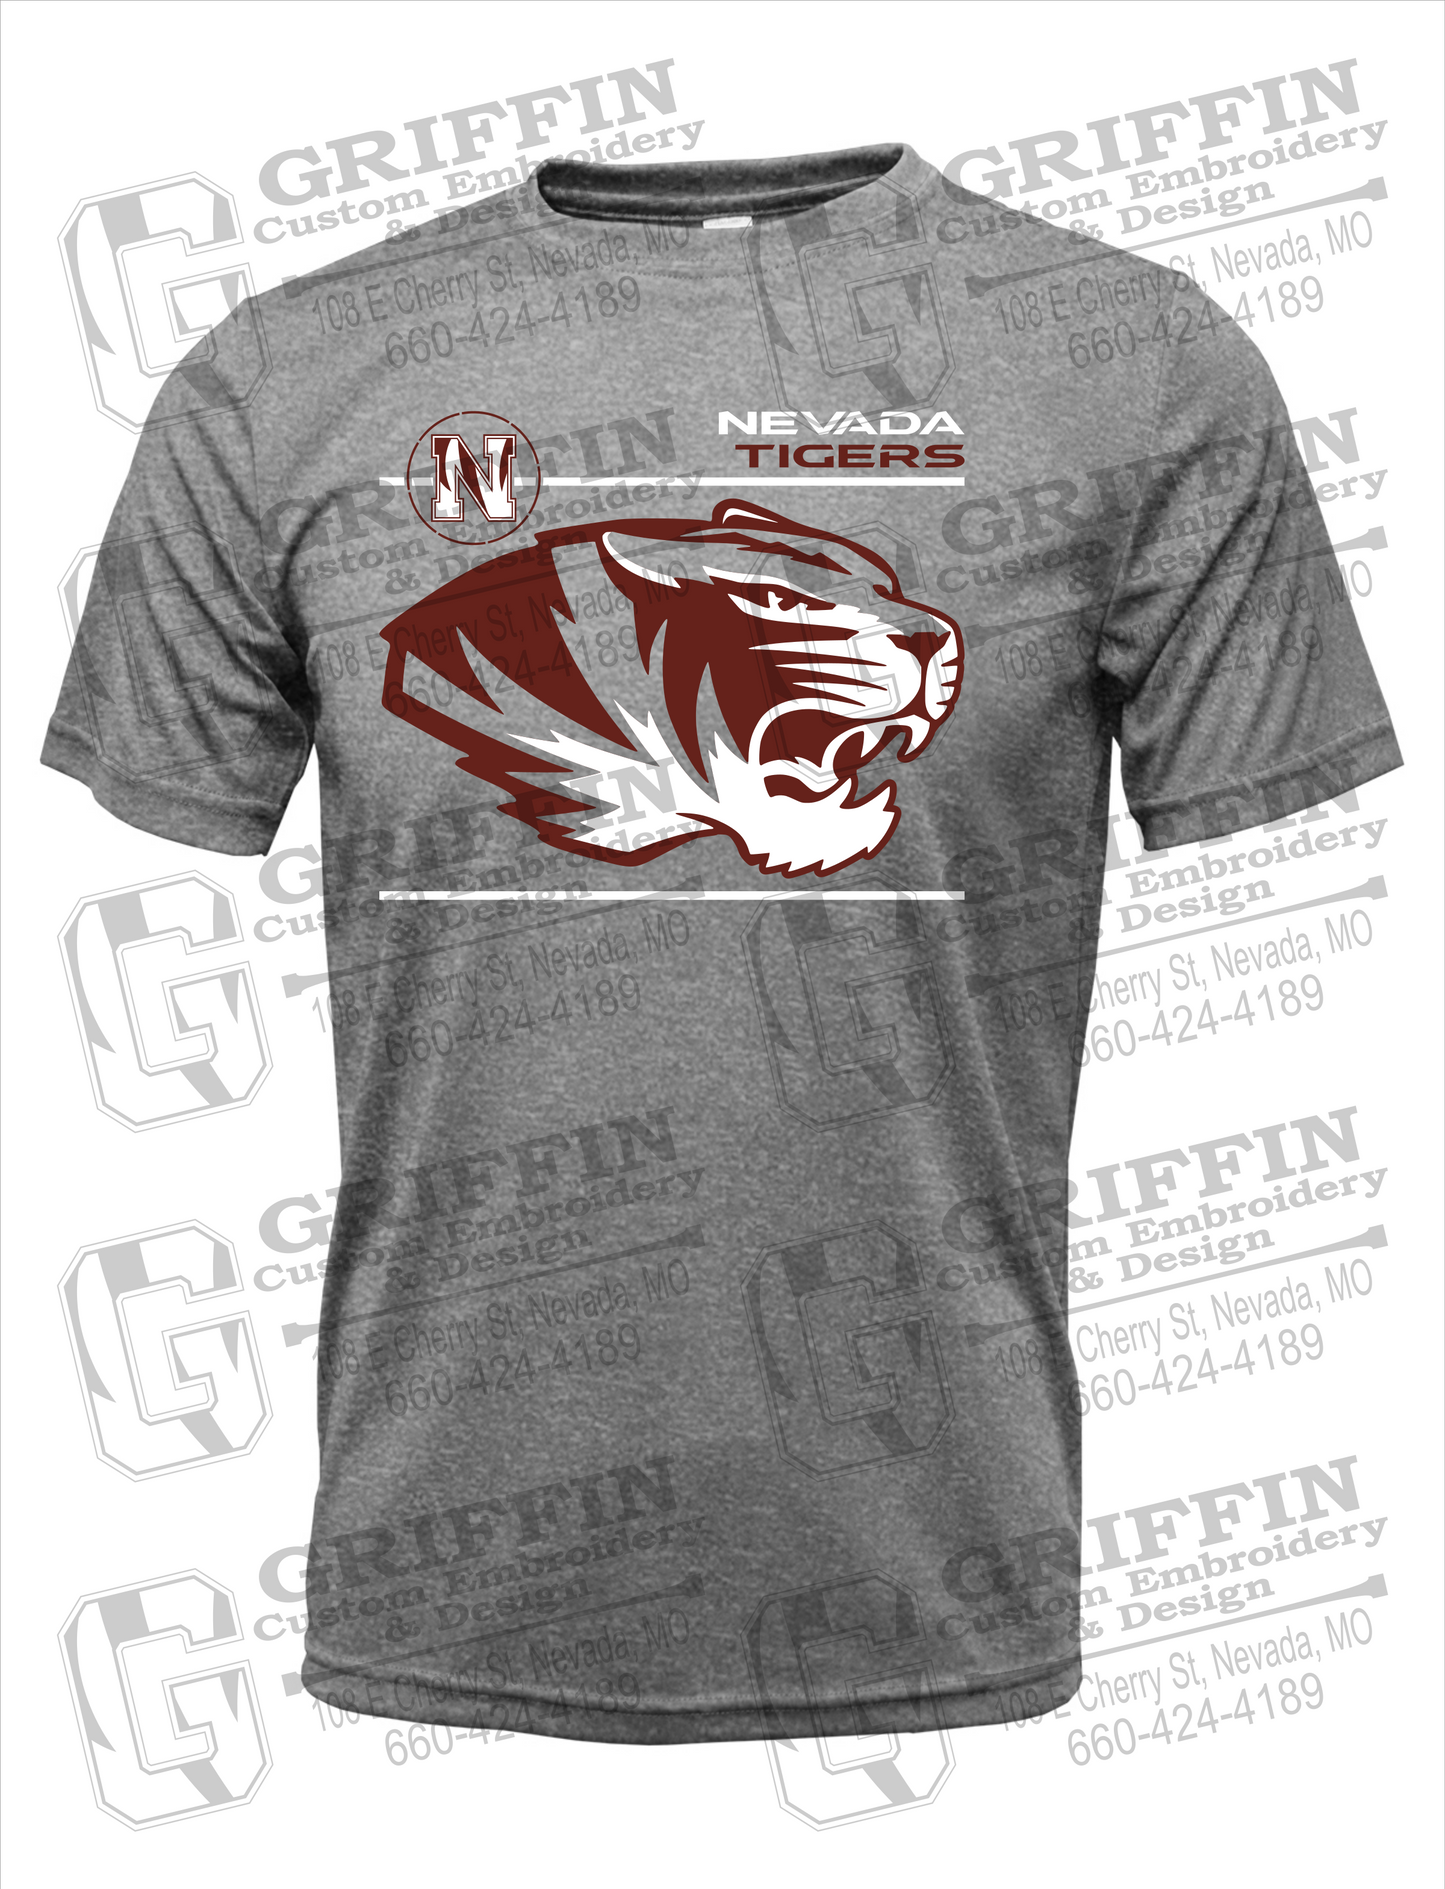 Nevada Tigers 22-D Dry-Fit T-Shirt